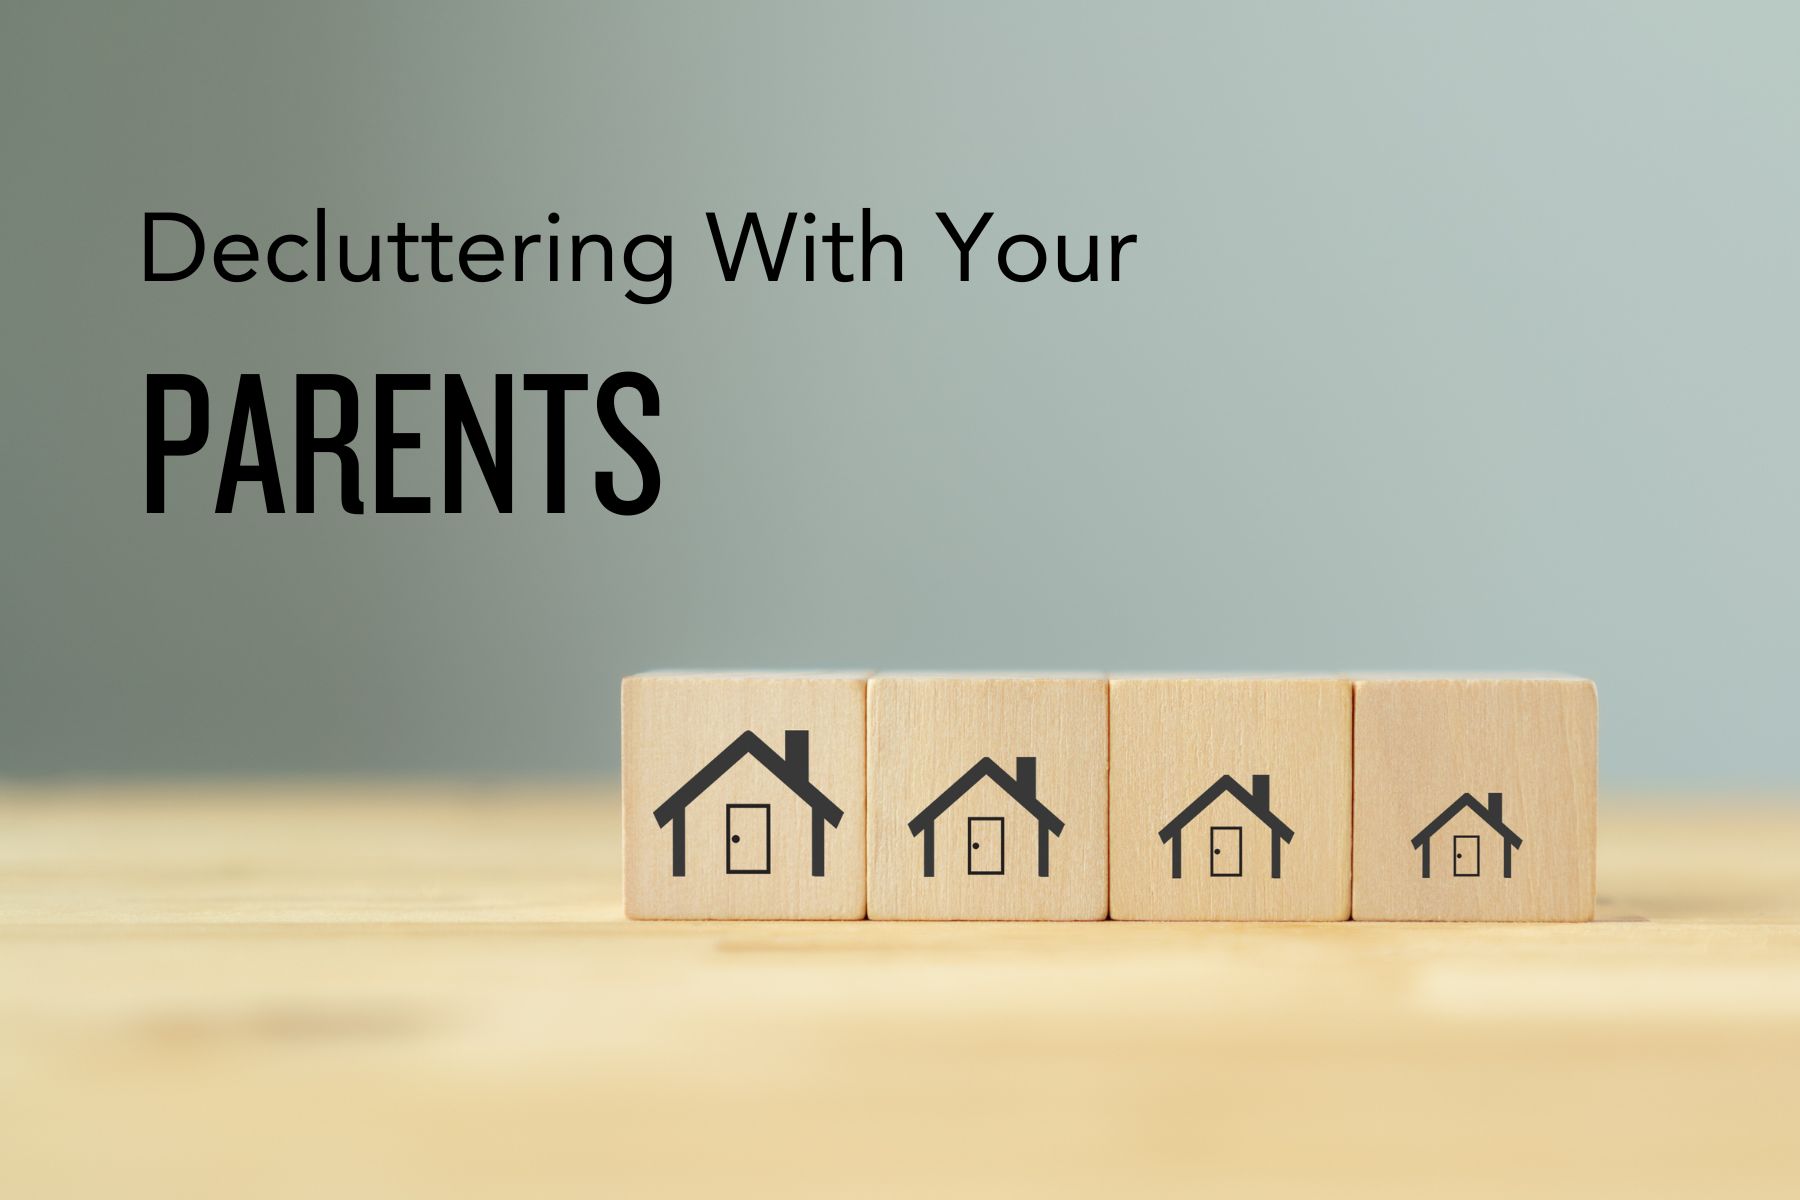 Decluttering your parents' home